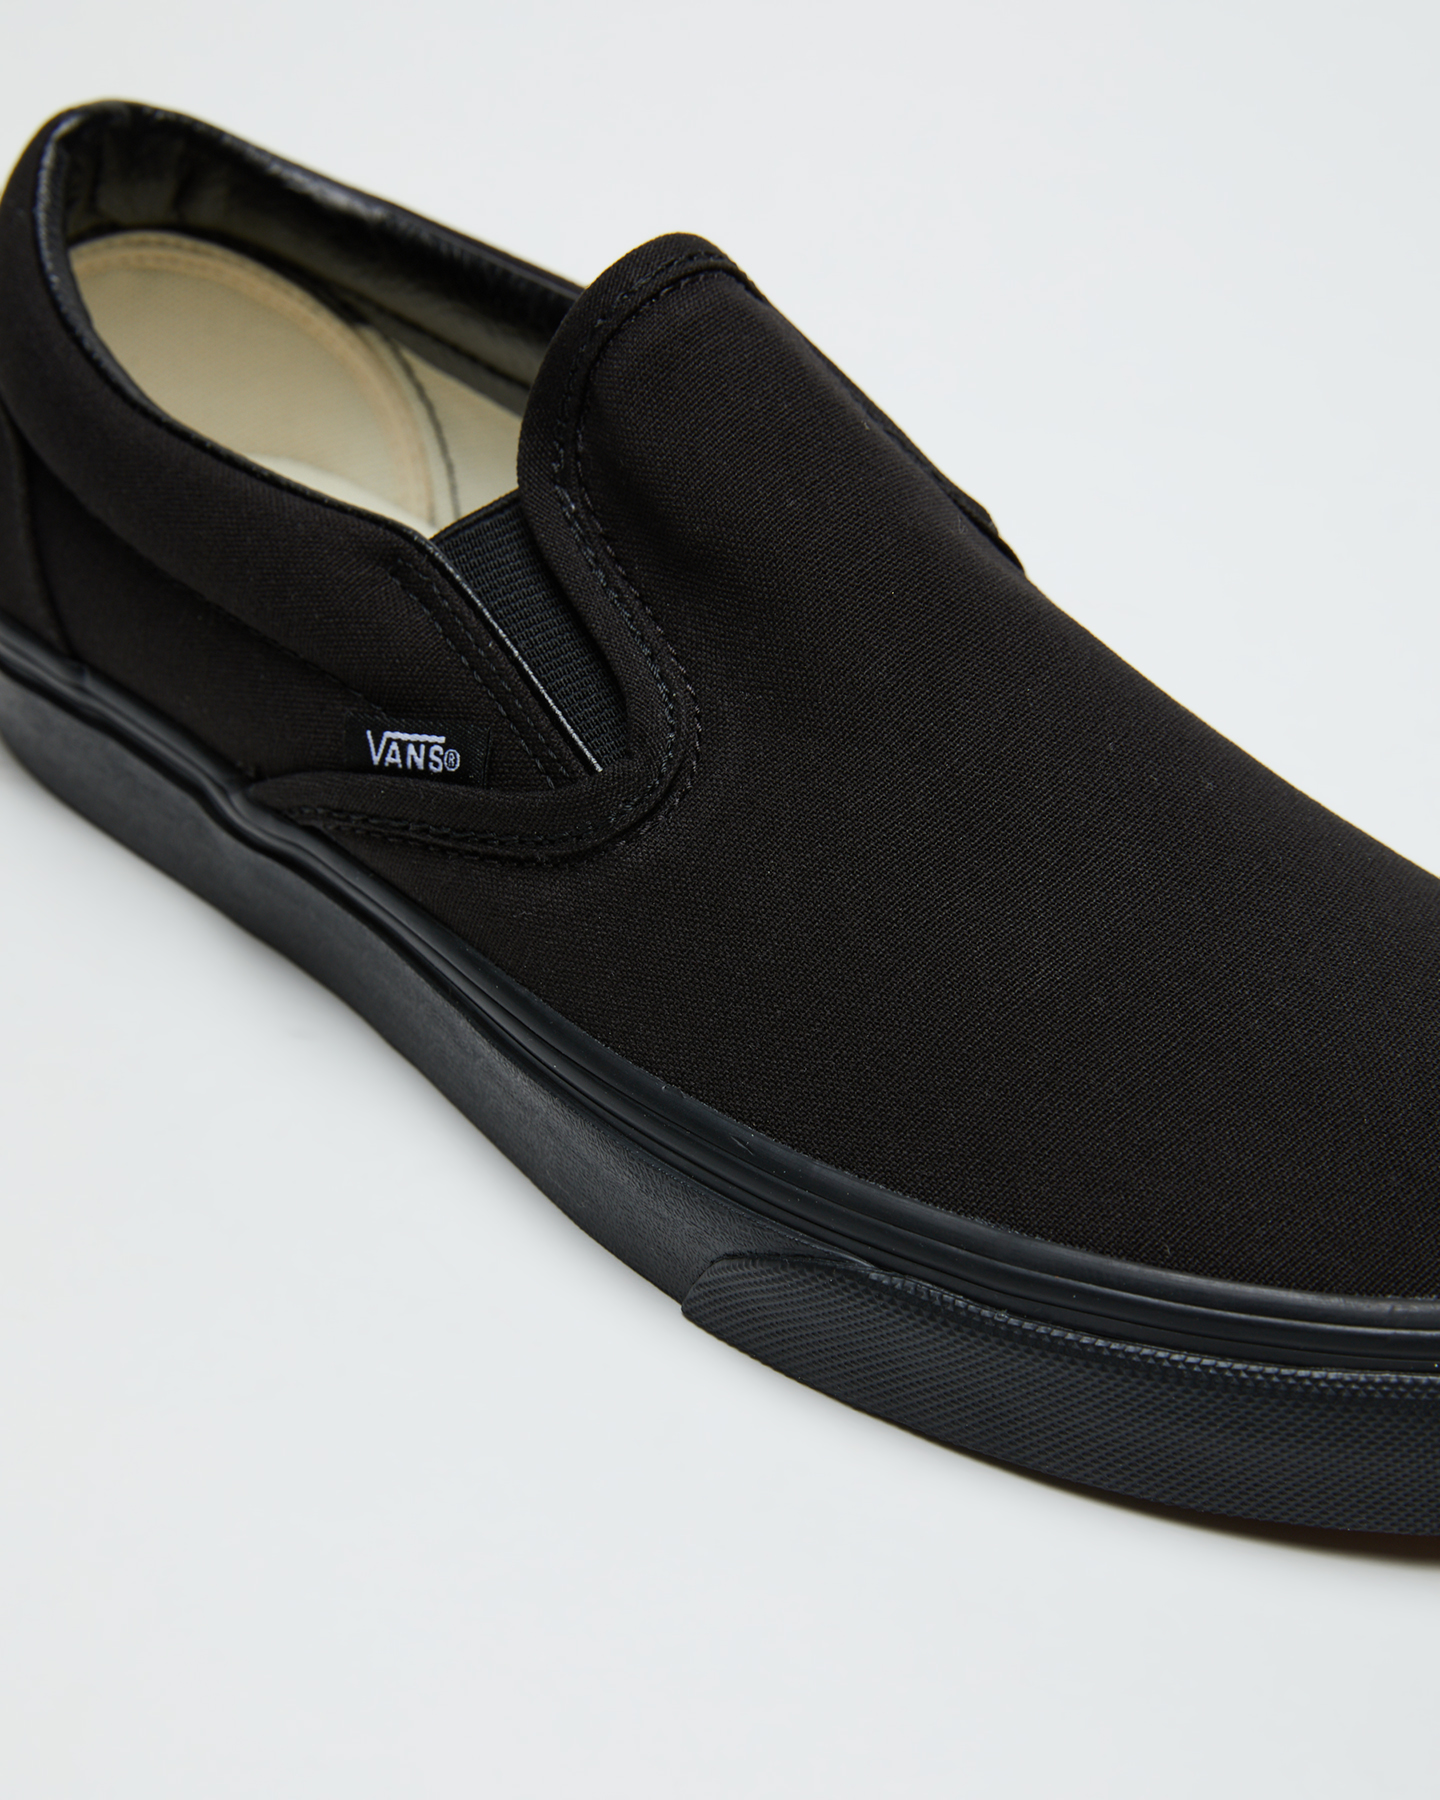 Vans Classic Slip On Shoe - Black/Black 